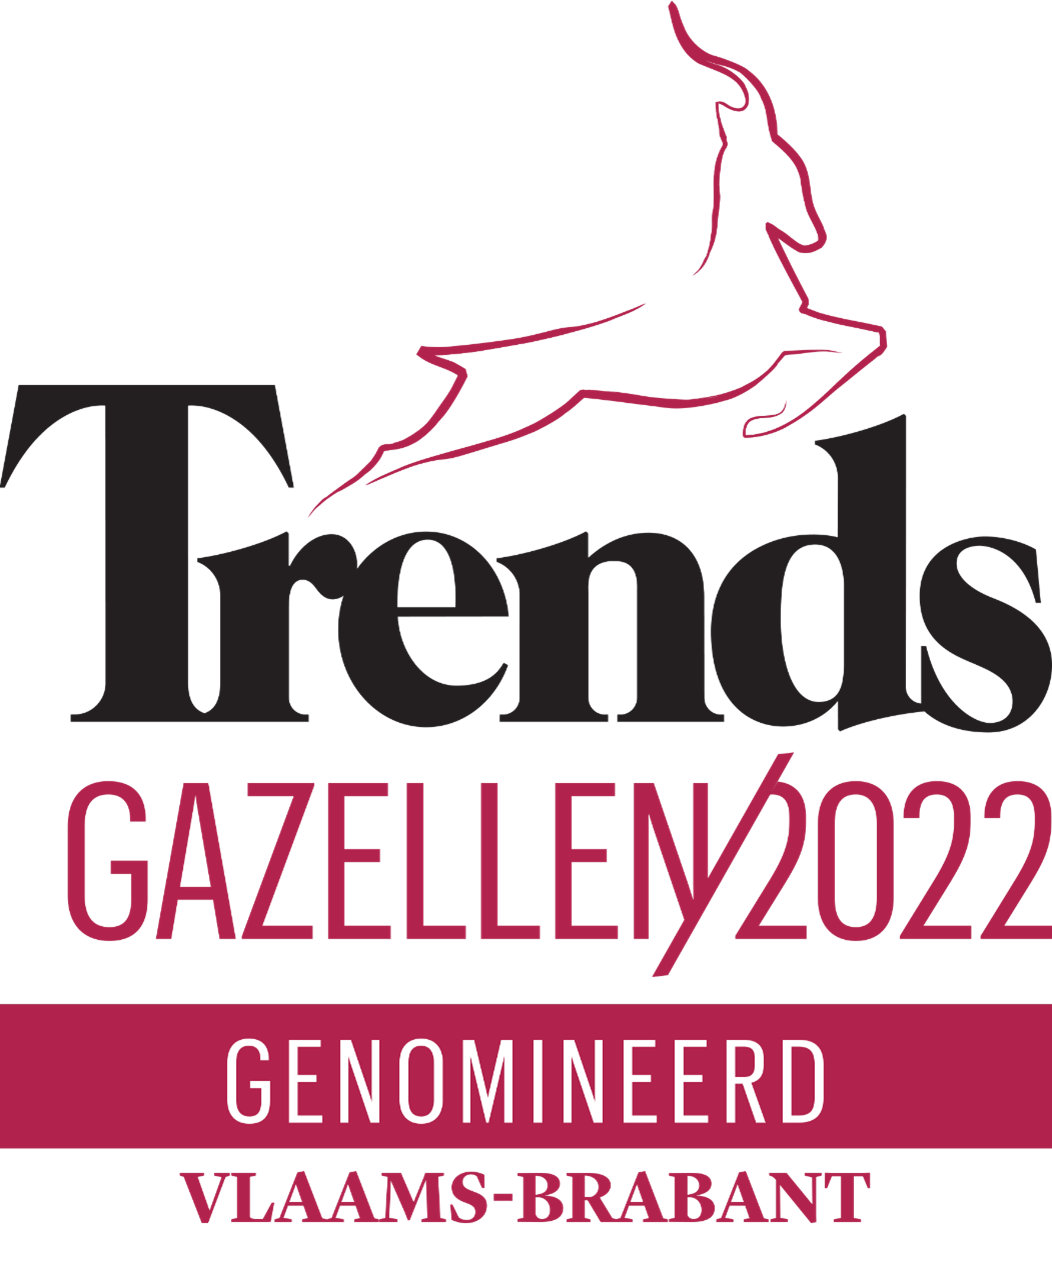 P95 nominated for the Trends Gazelles Flemish Brabant 2022